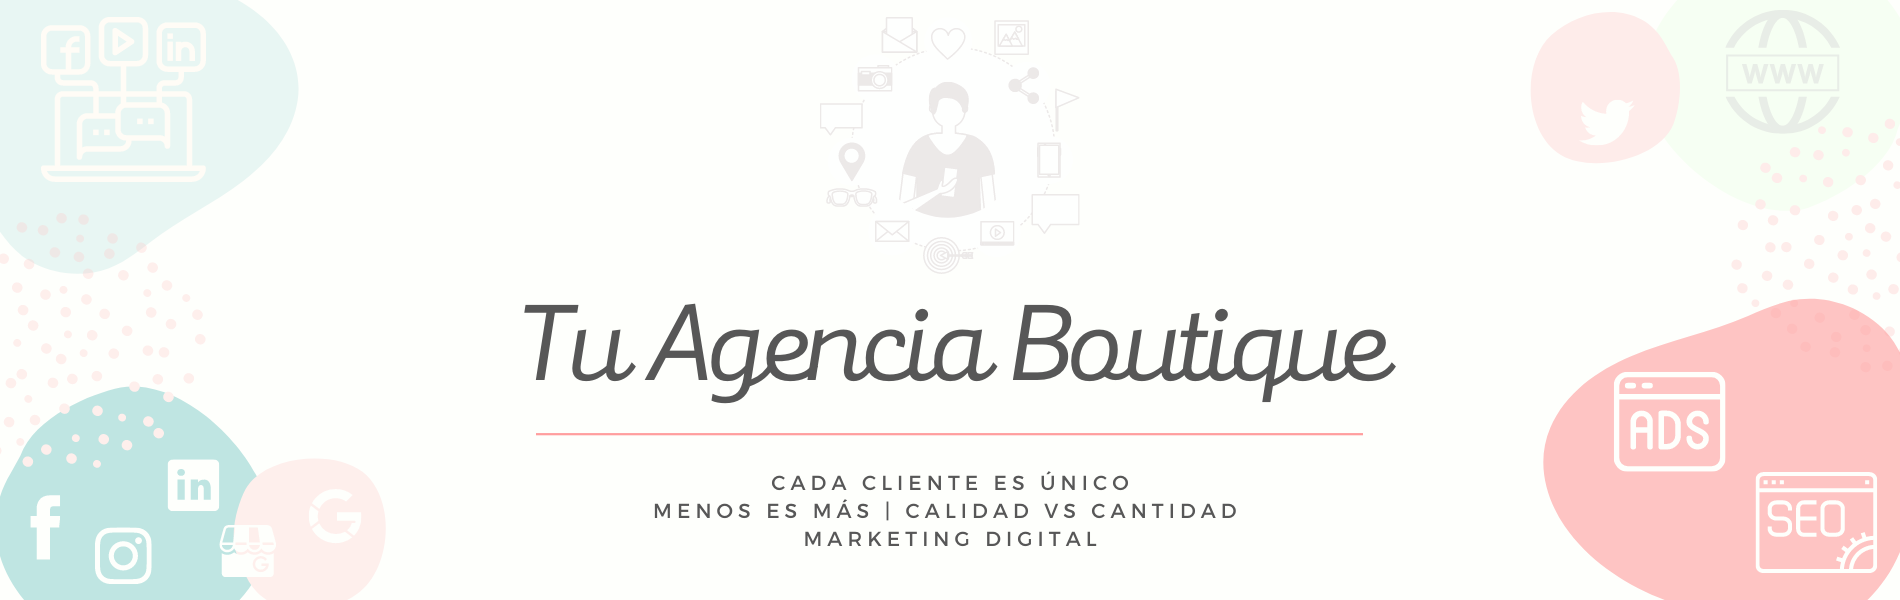 Agencia Marketing digital Boutique